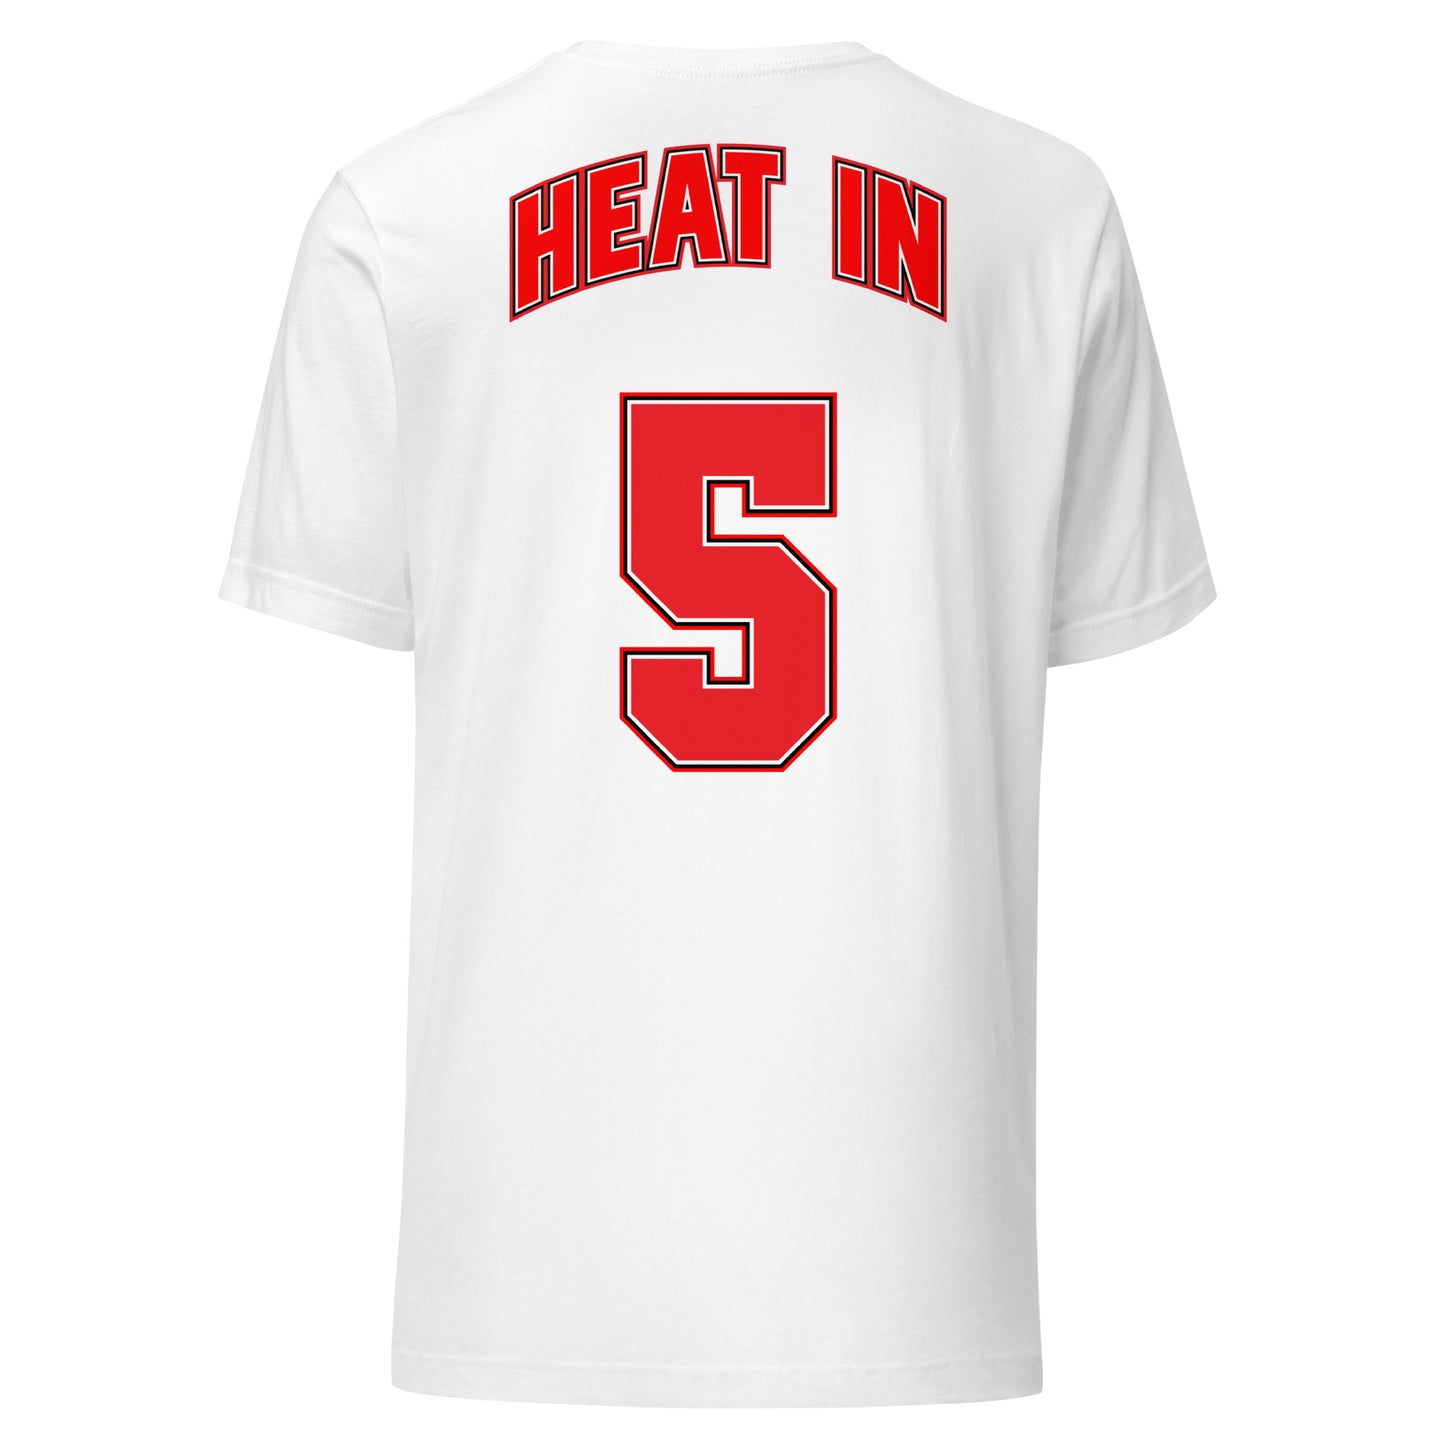 Heat In 5 Shirt